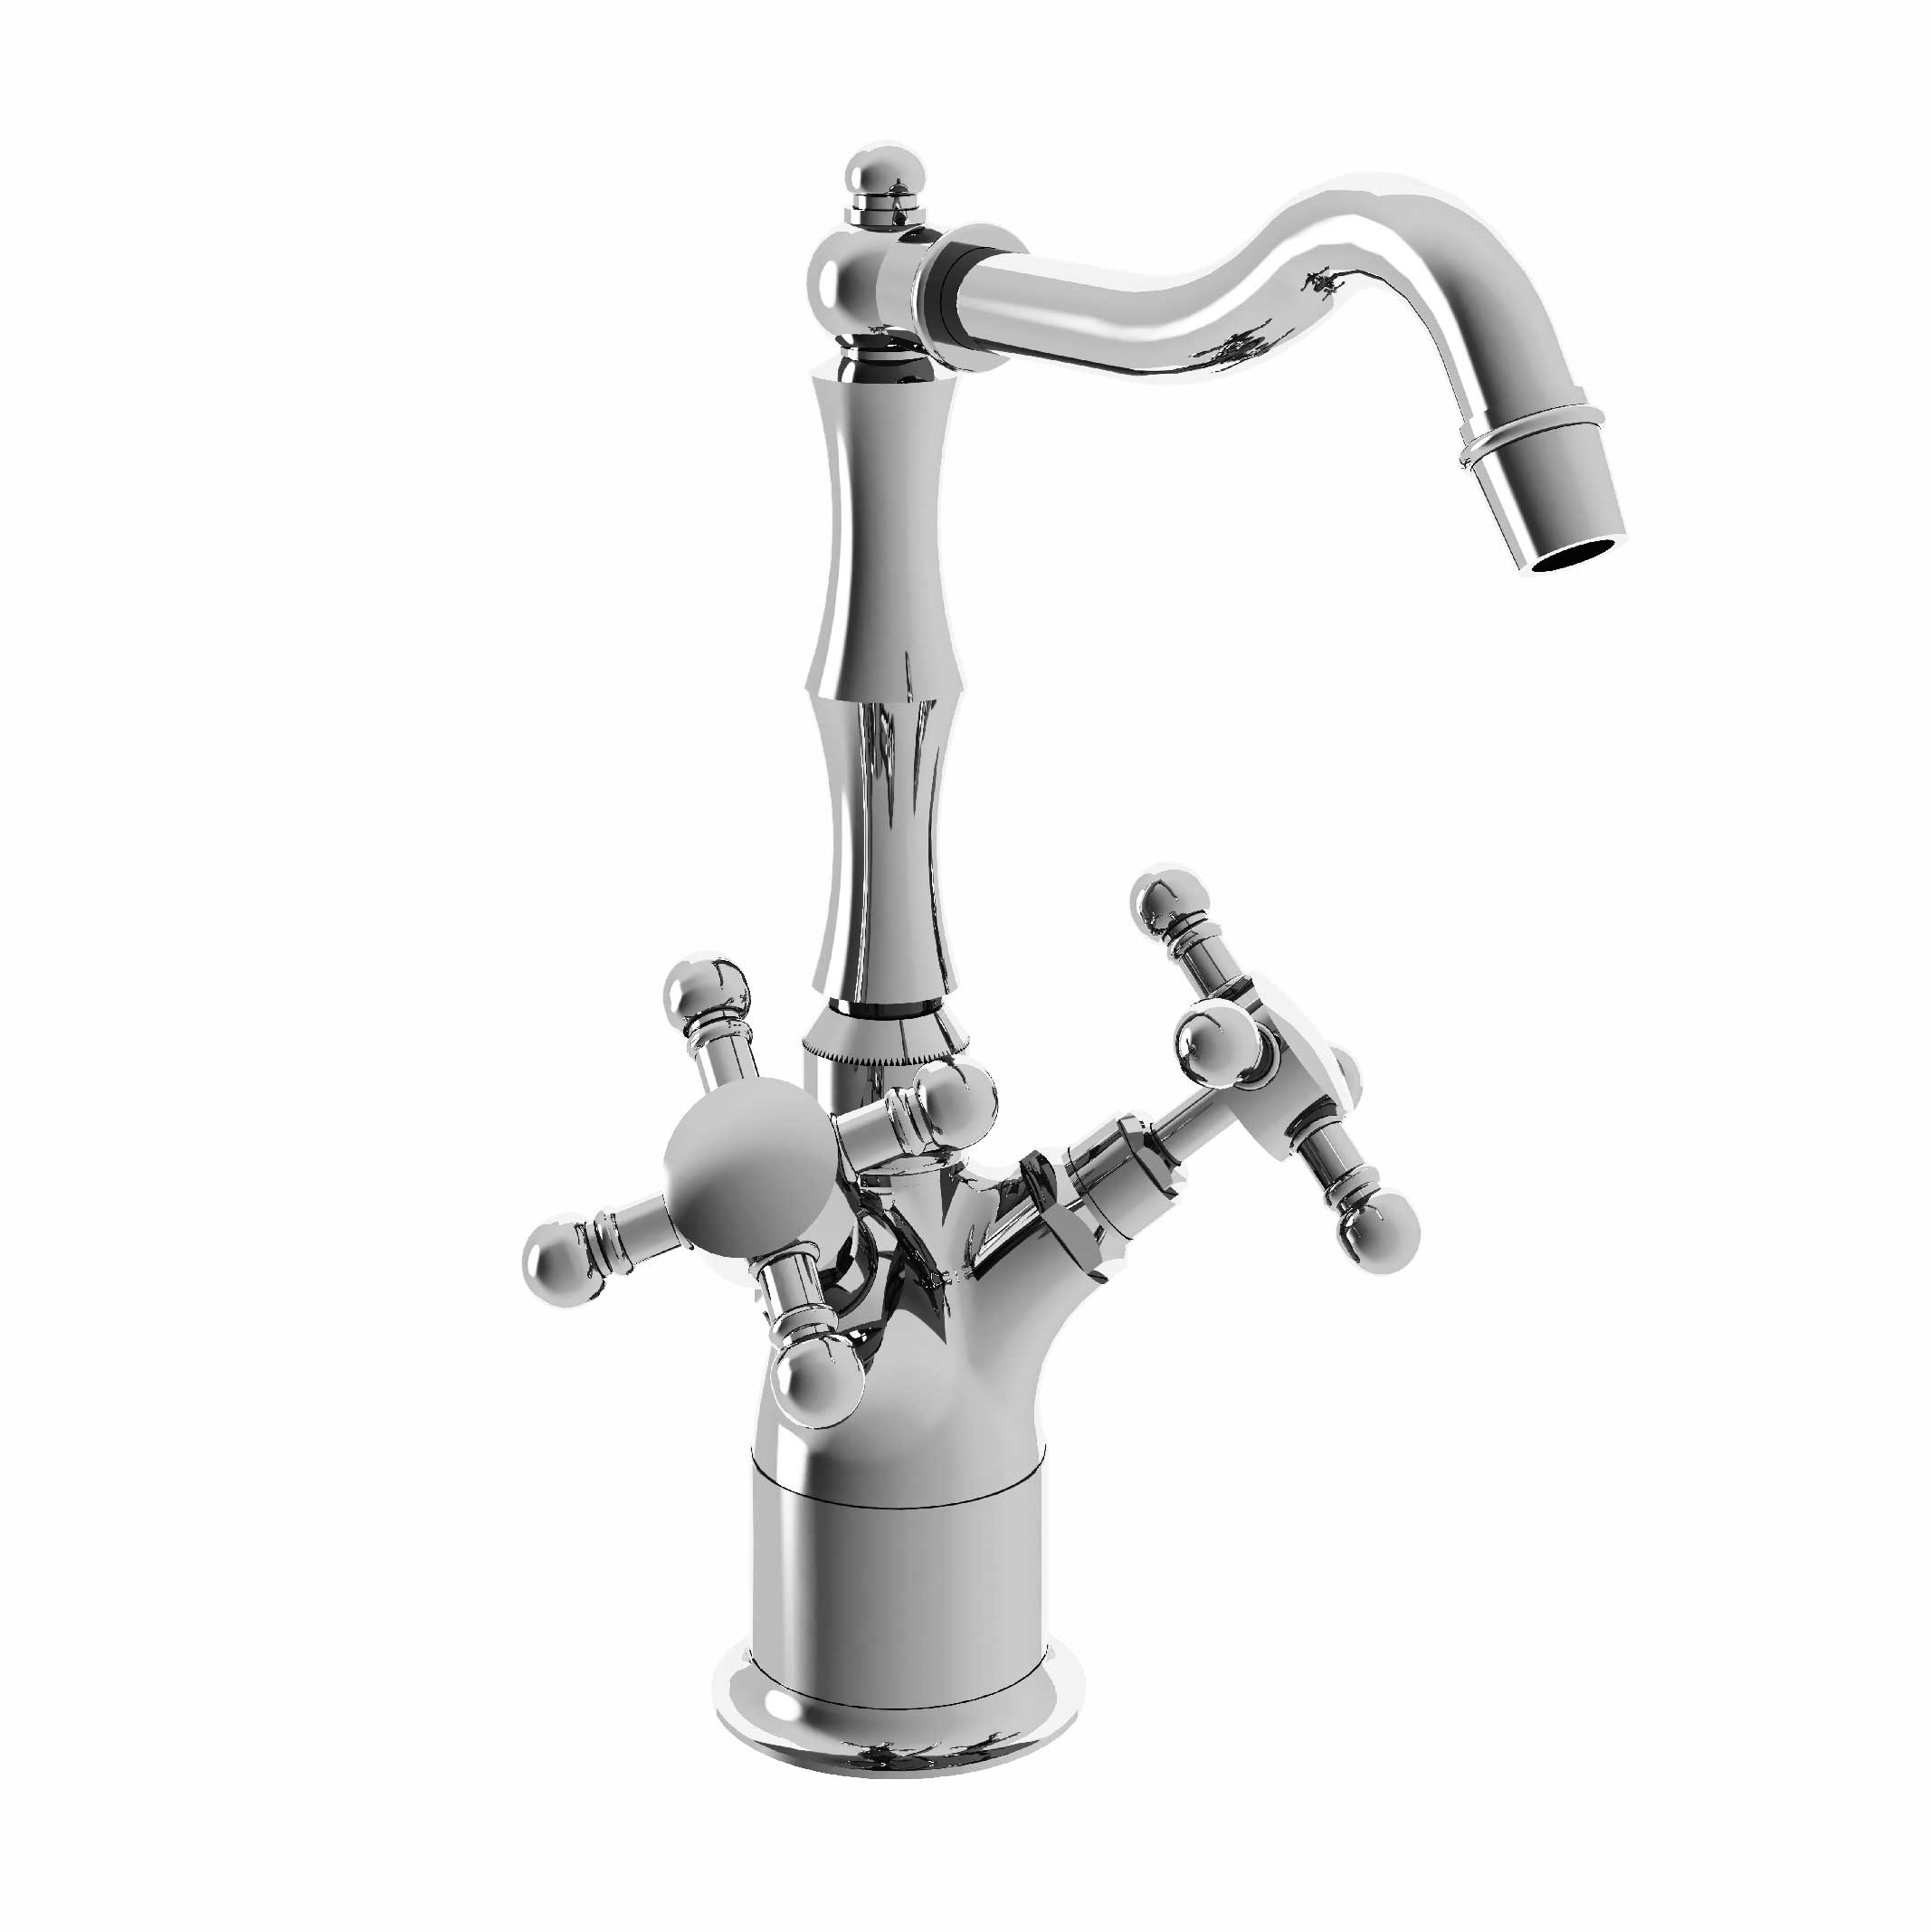 M04-4102 Single-hole wash-hand basin mixer